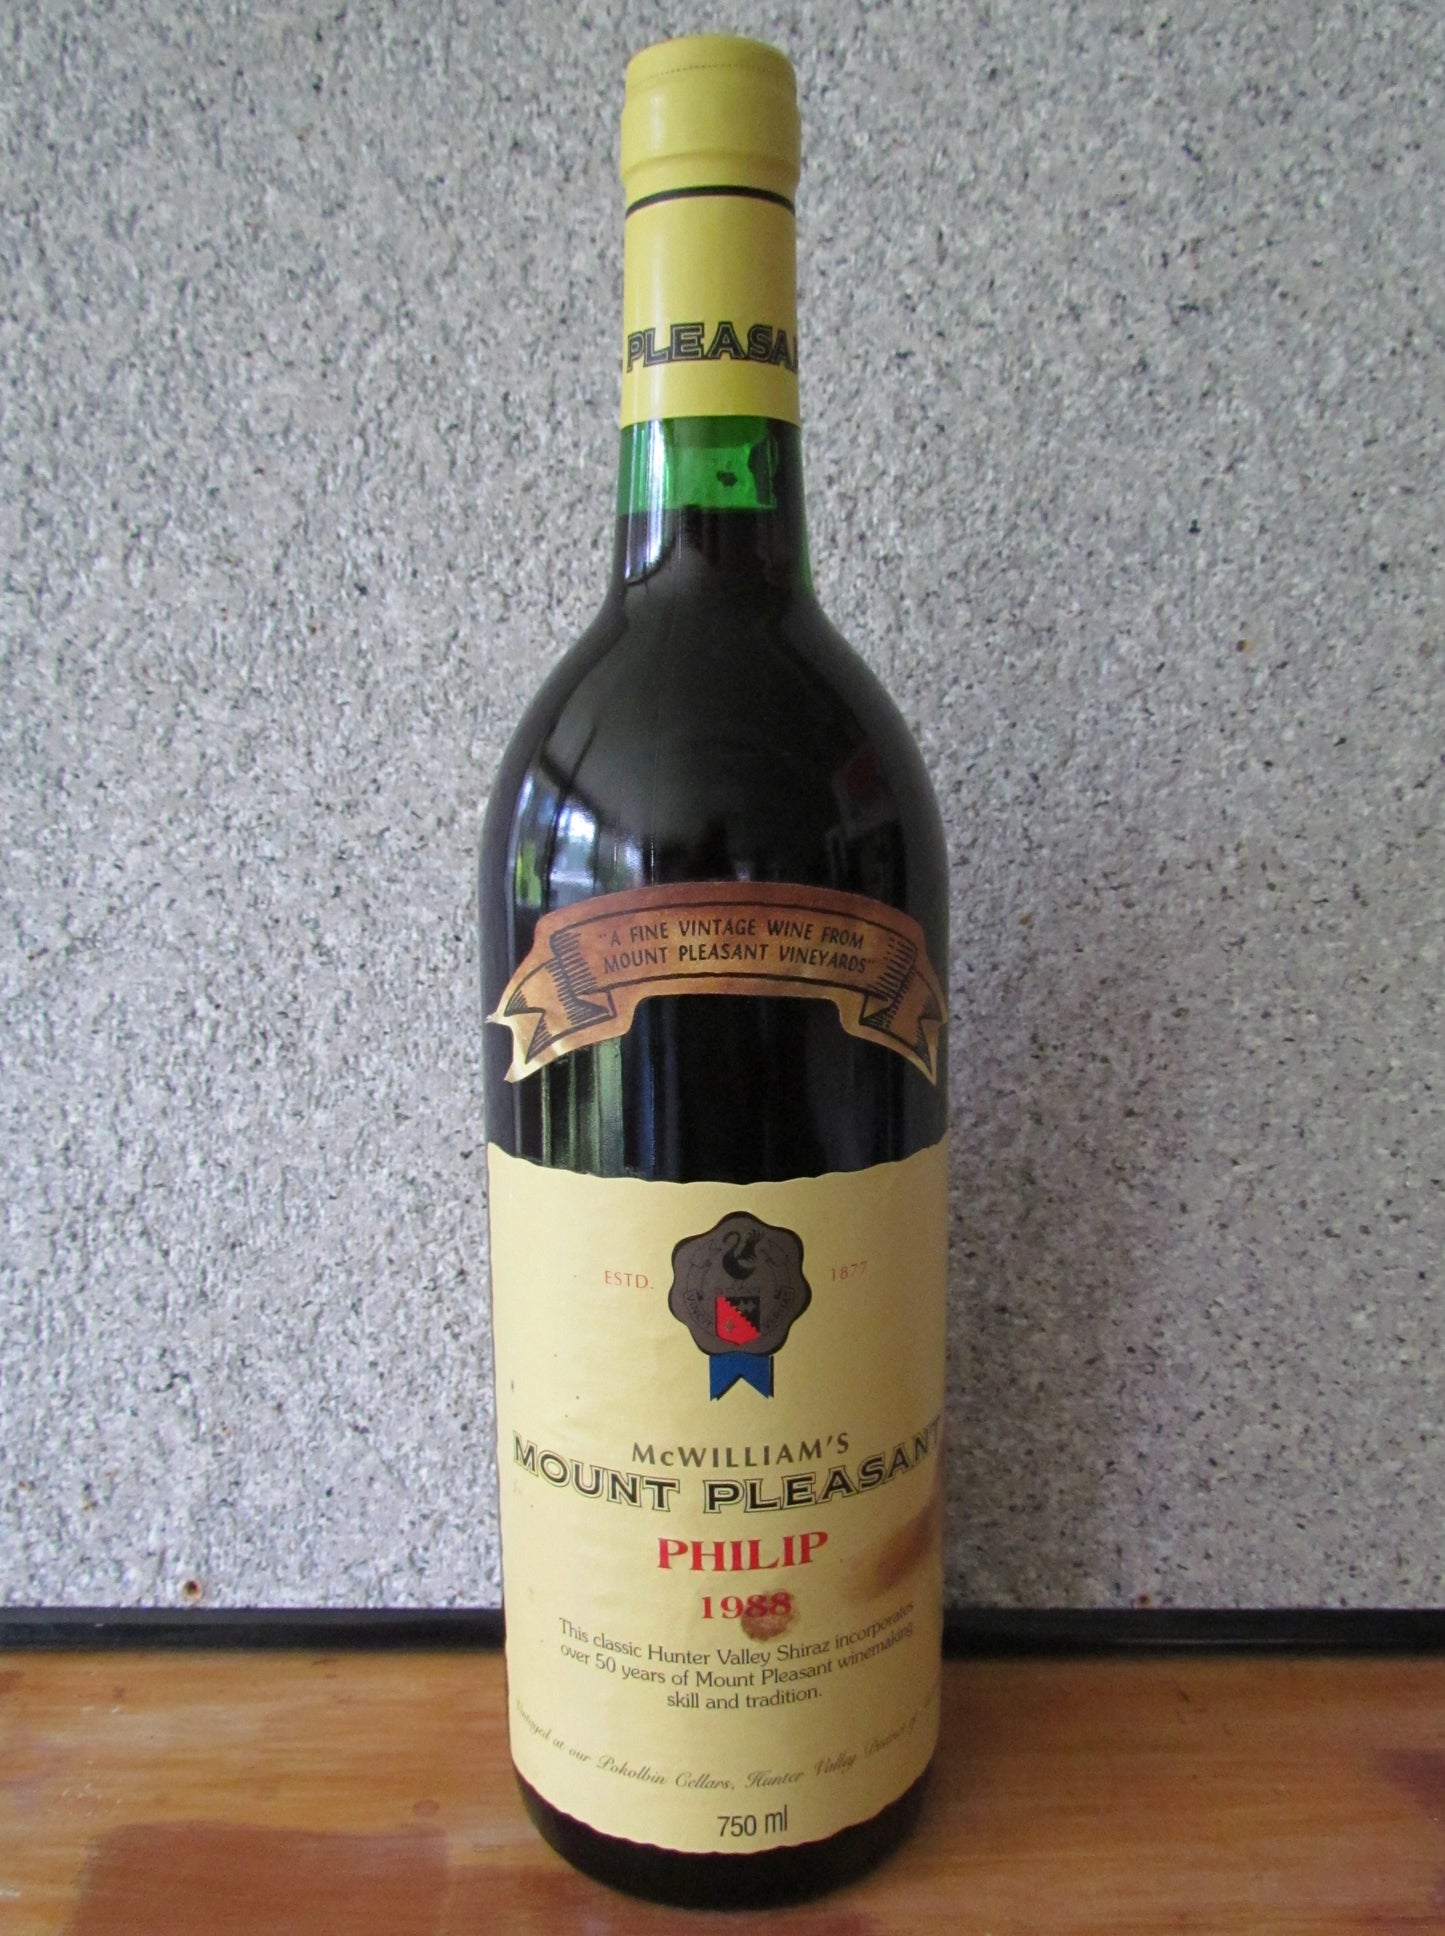 1988 McWilliams Mount Pleasant Shiraz Philip 750 ml